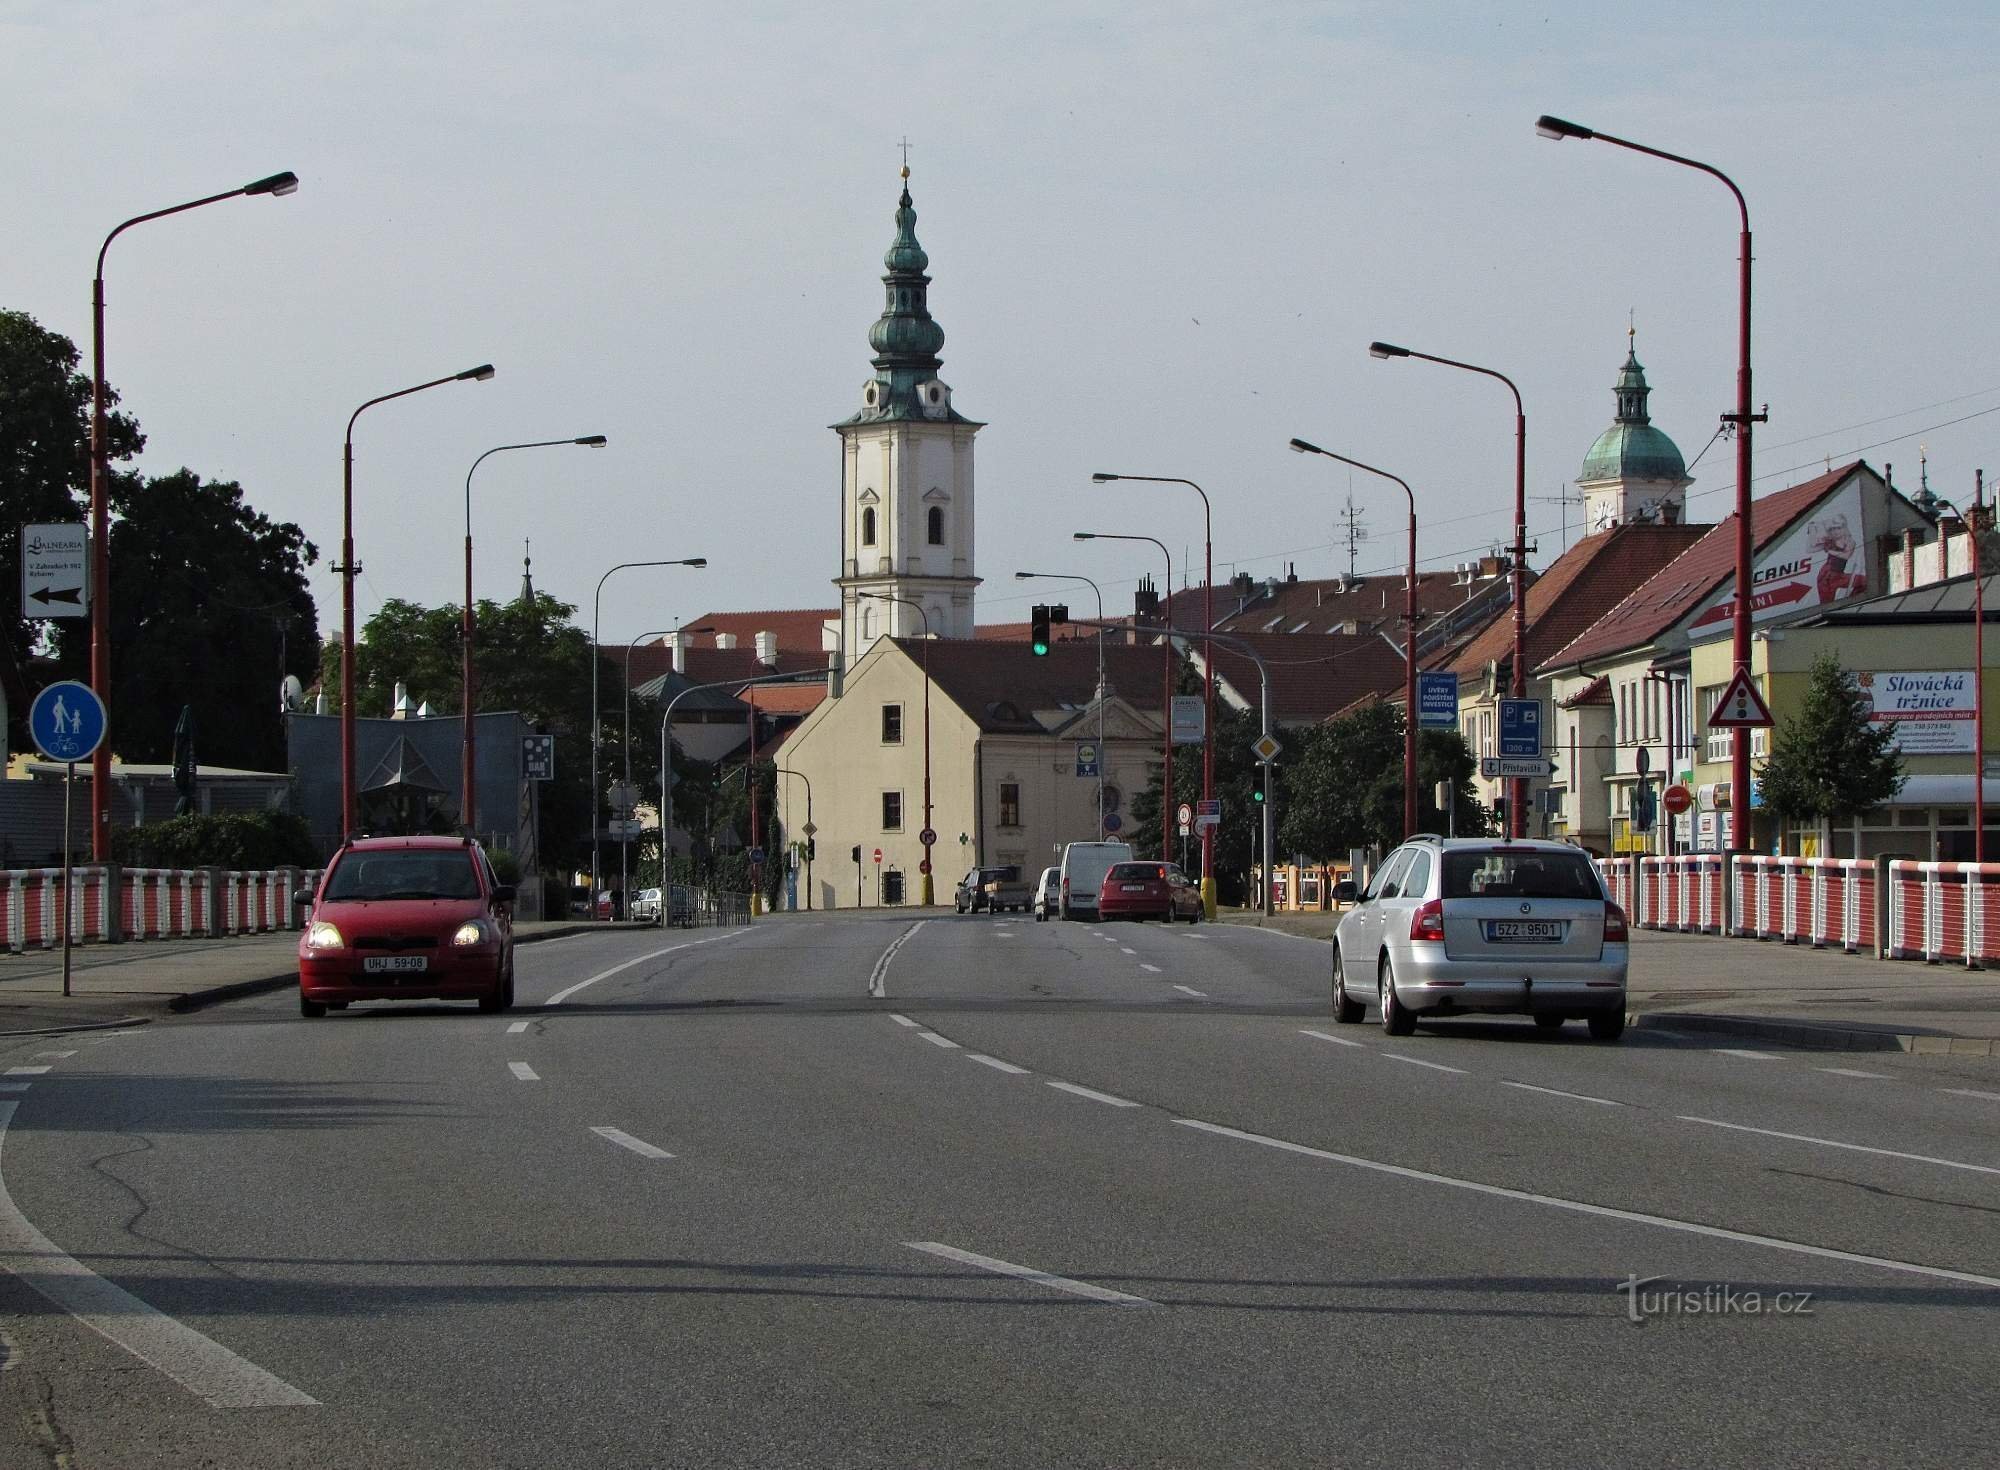 Uherské Hradiště – teren klasztoru i kościoła franciszkanów